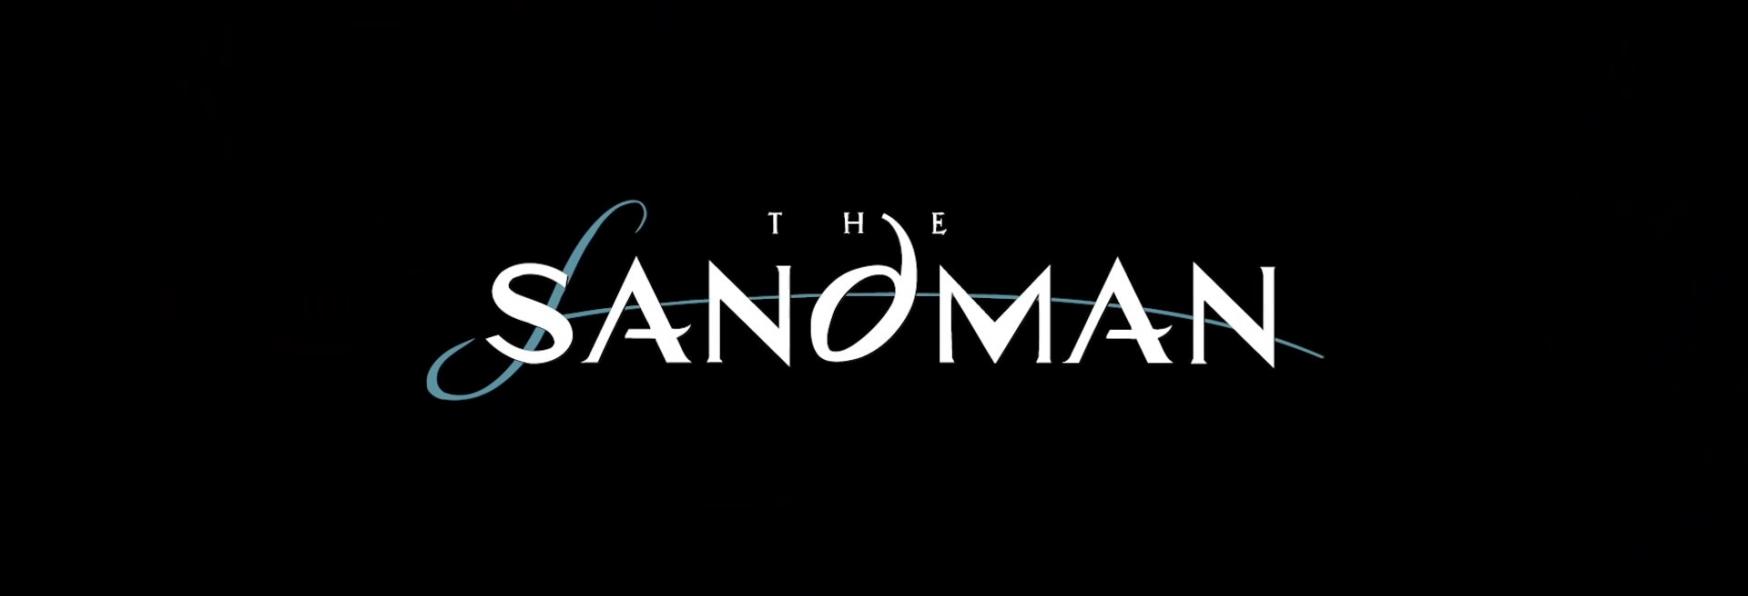 The Sandman: il Video della Geeked Week 2022 mostra Gwendoline Christie nei panni di Lucifer